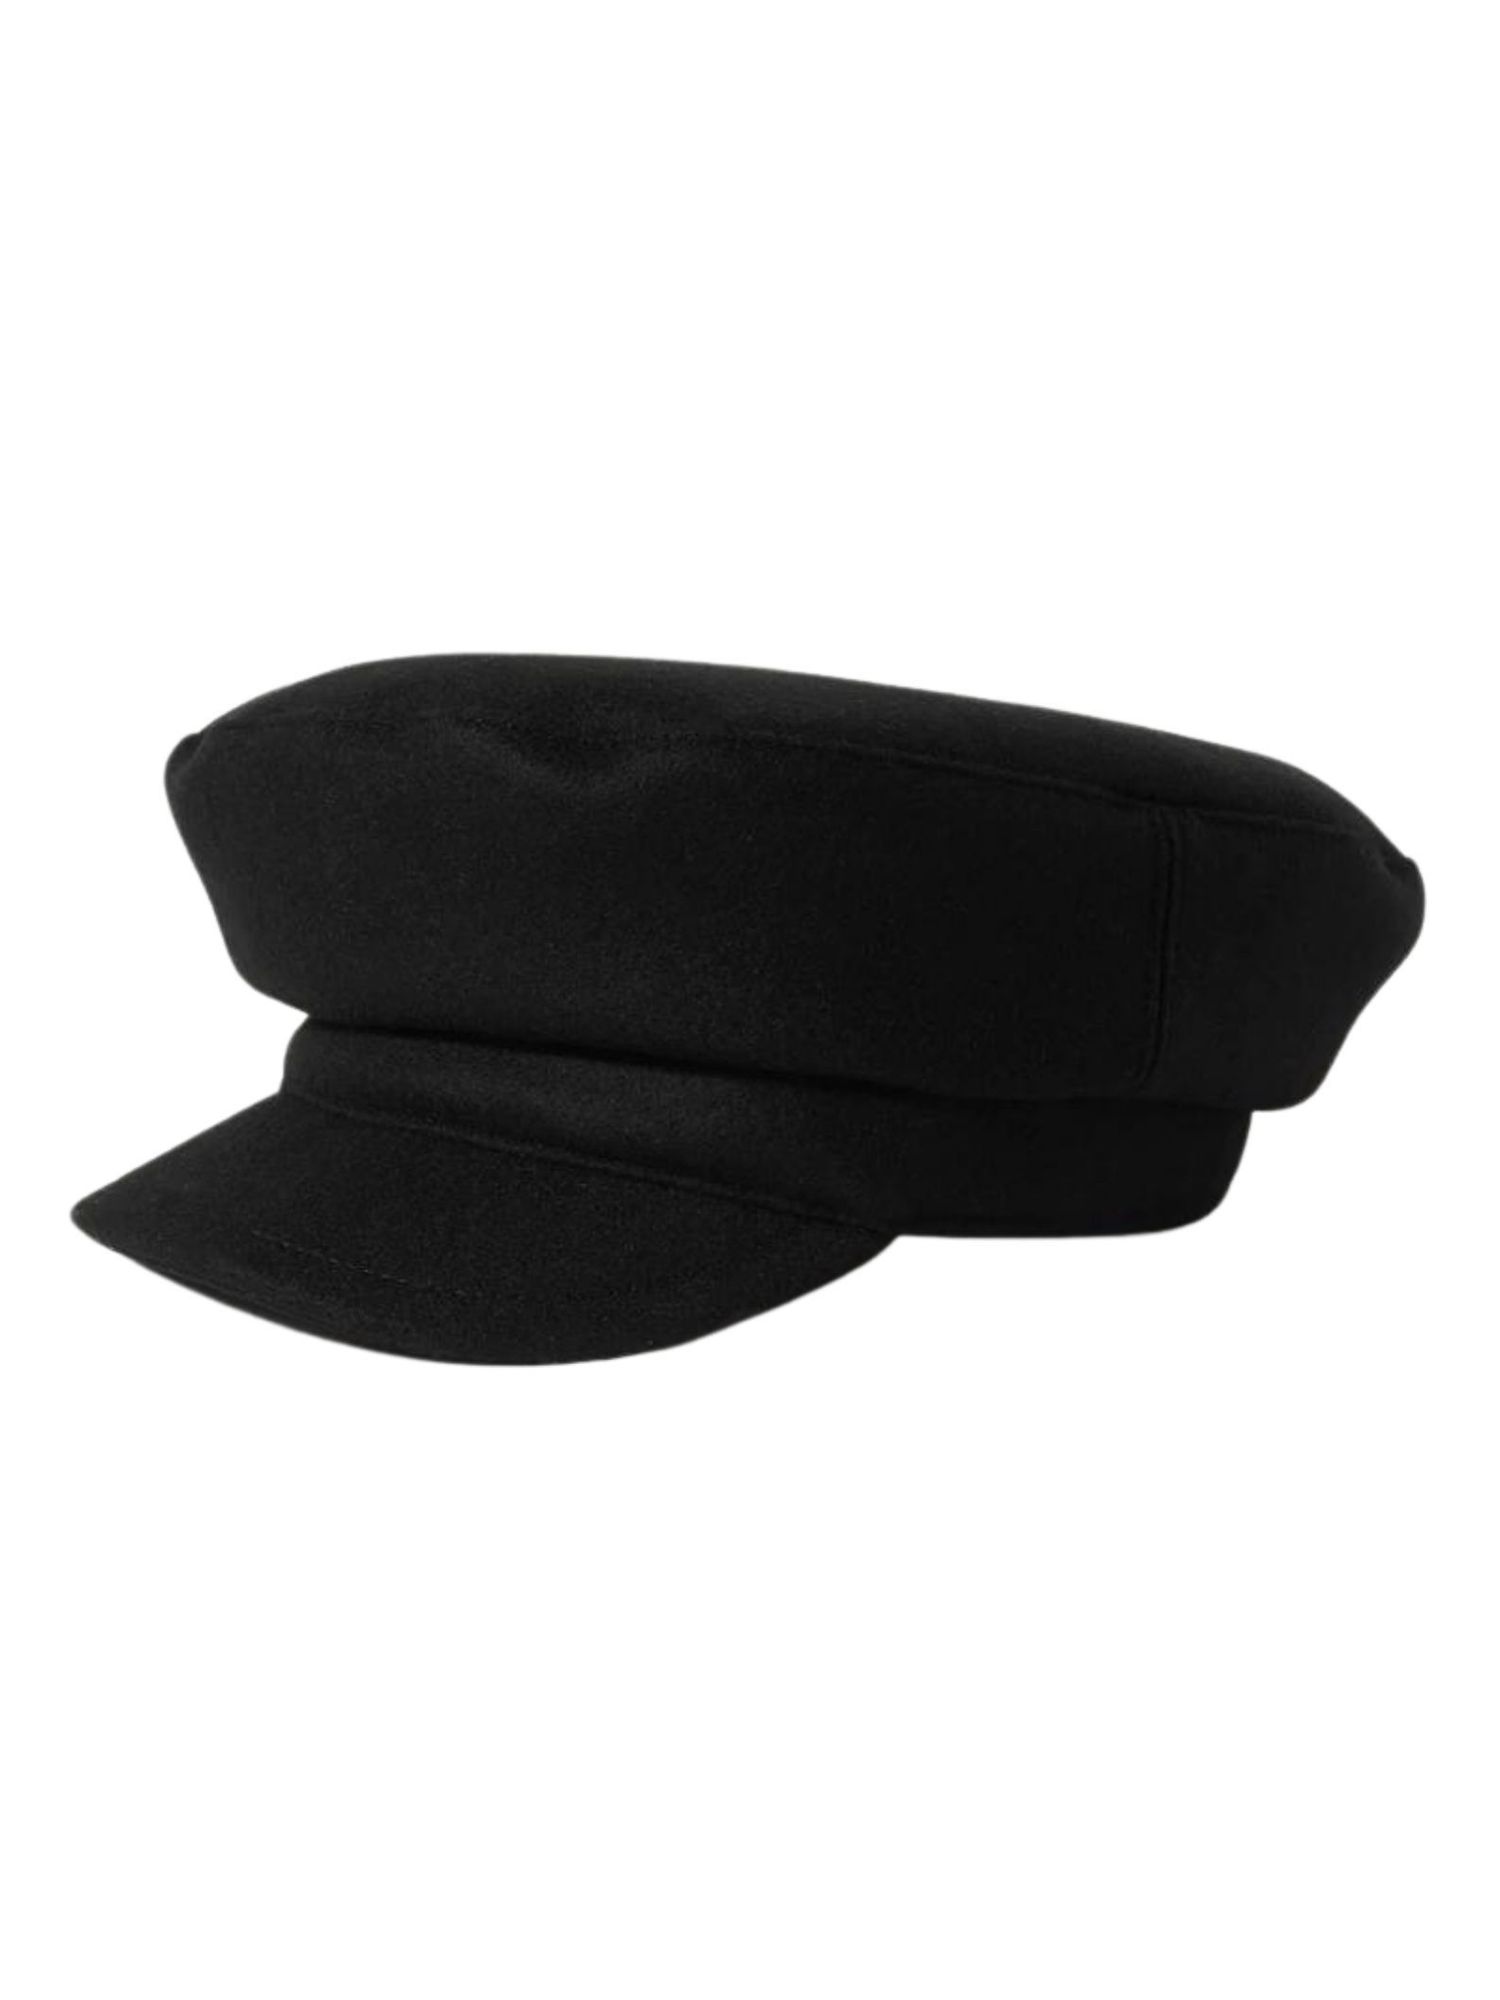 The best newsboy caps and baker boy hats to buy in 2021 - Vogue Scandinavia